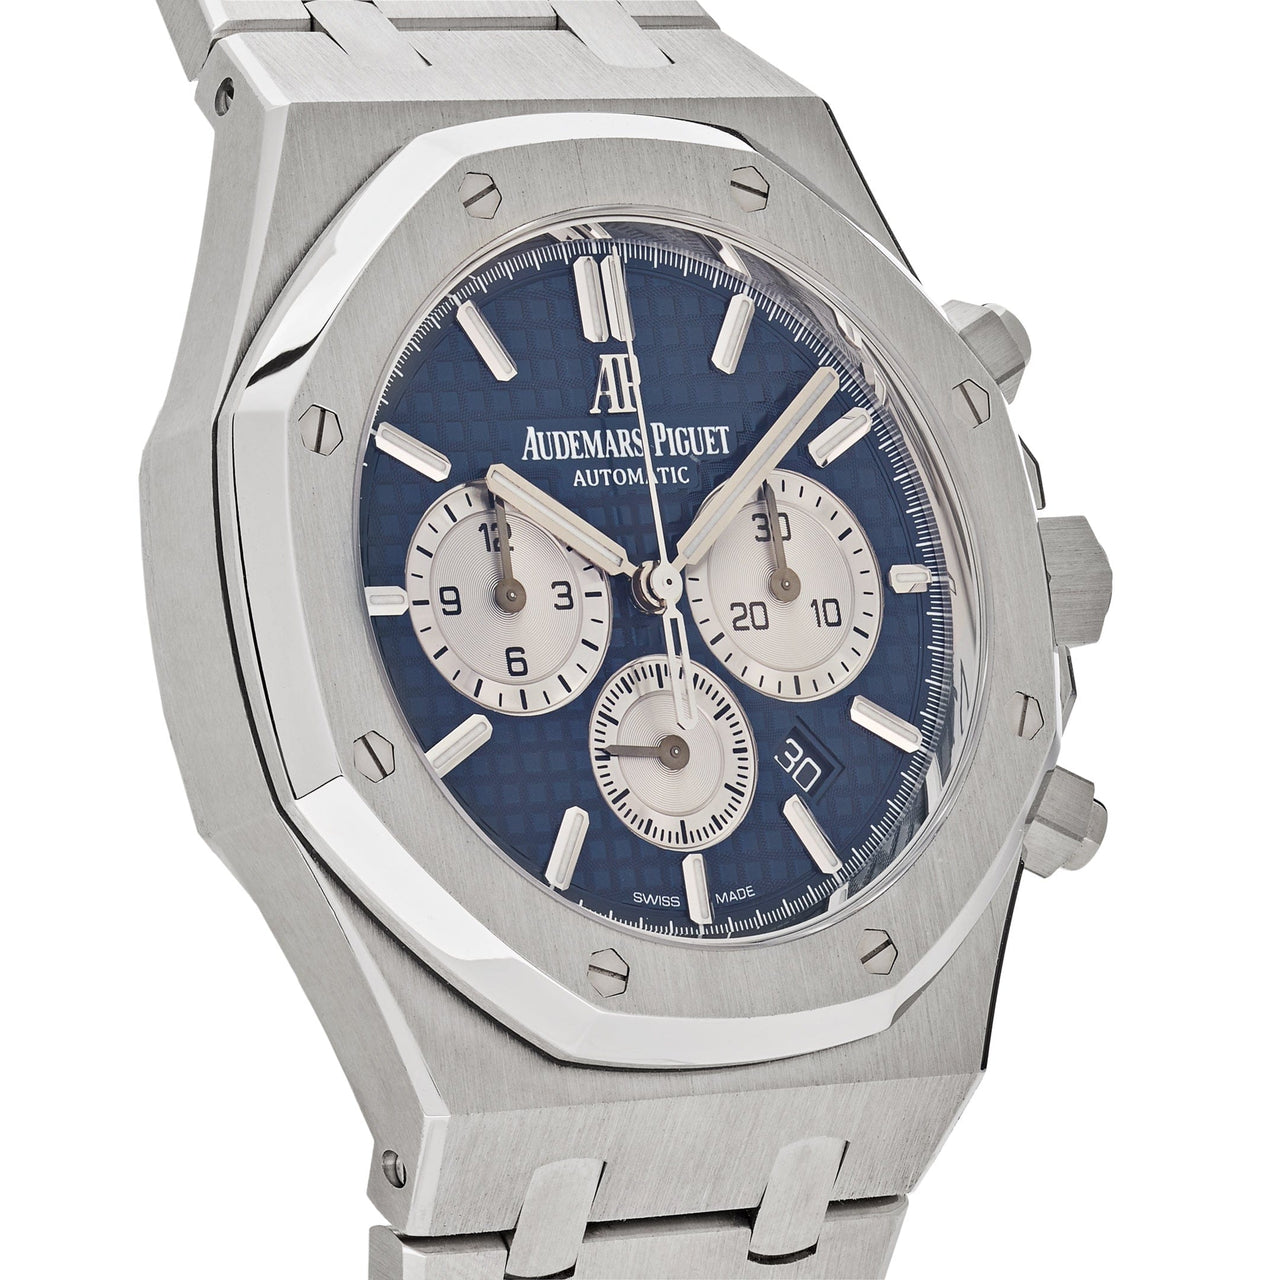 Luxury Watch Audemars Piguet Royal Oak Selfwinding Chronograph 41mm Steel Blue Dial 26331ST.OO.1220ST.01 Wrist Aficionado